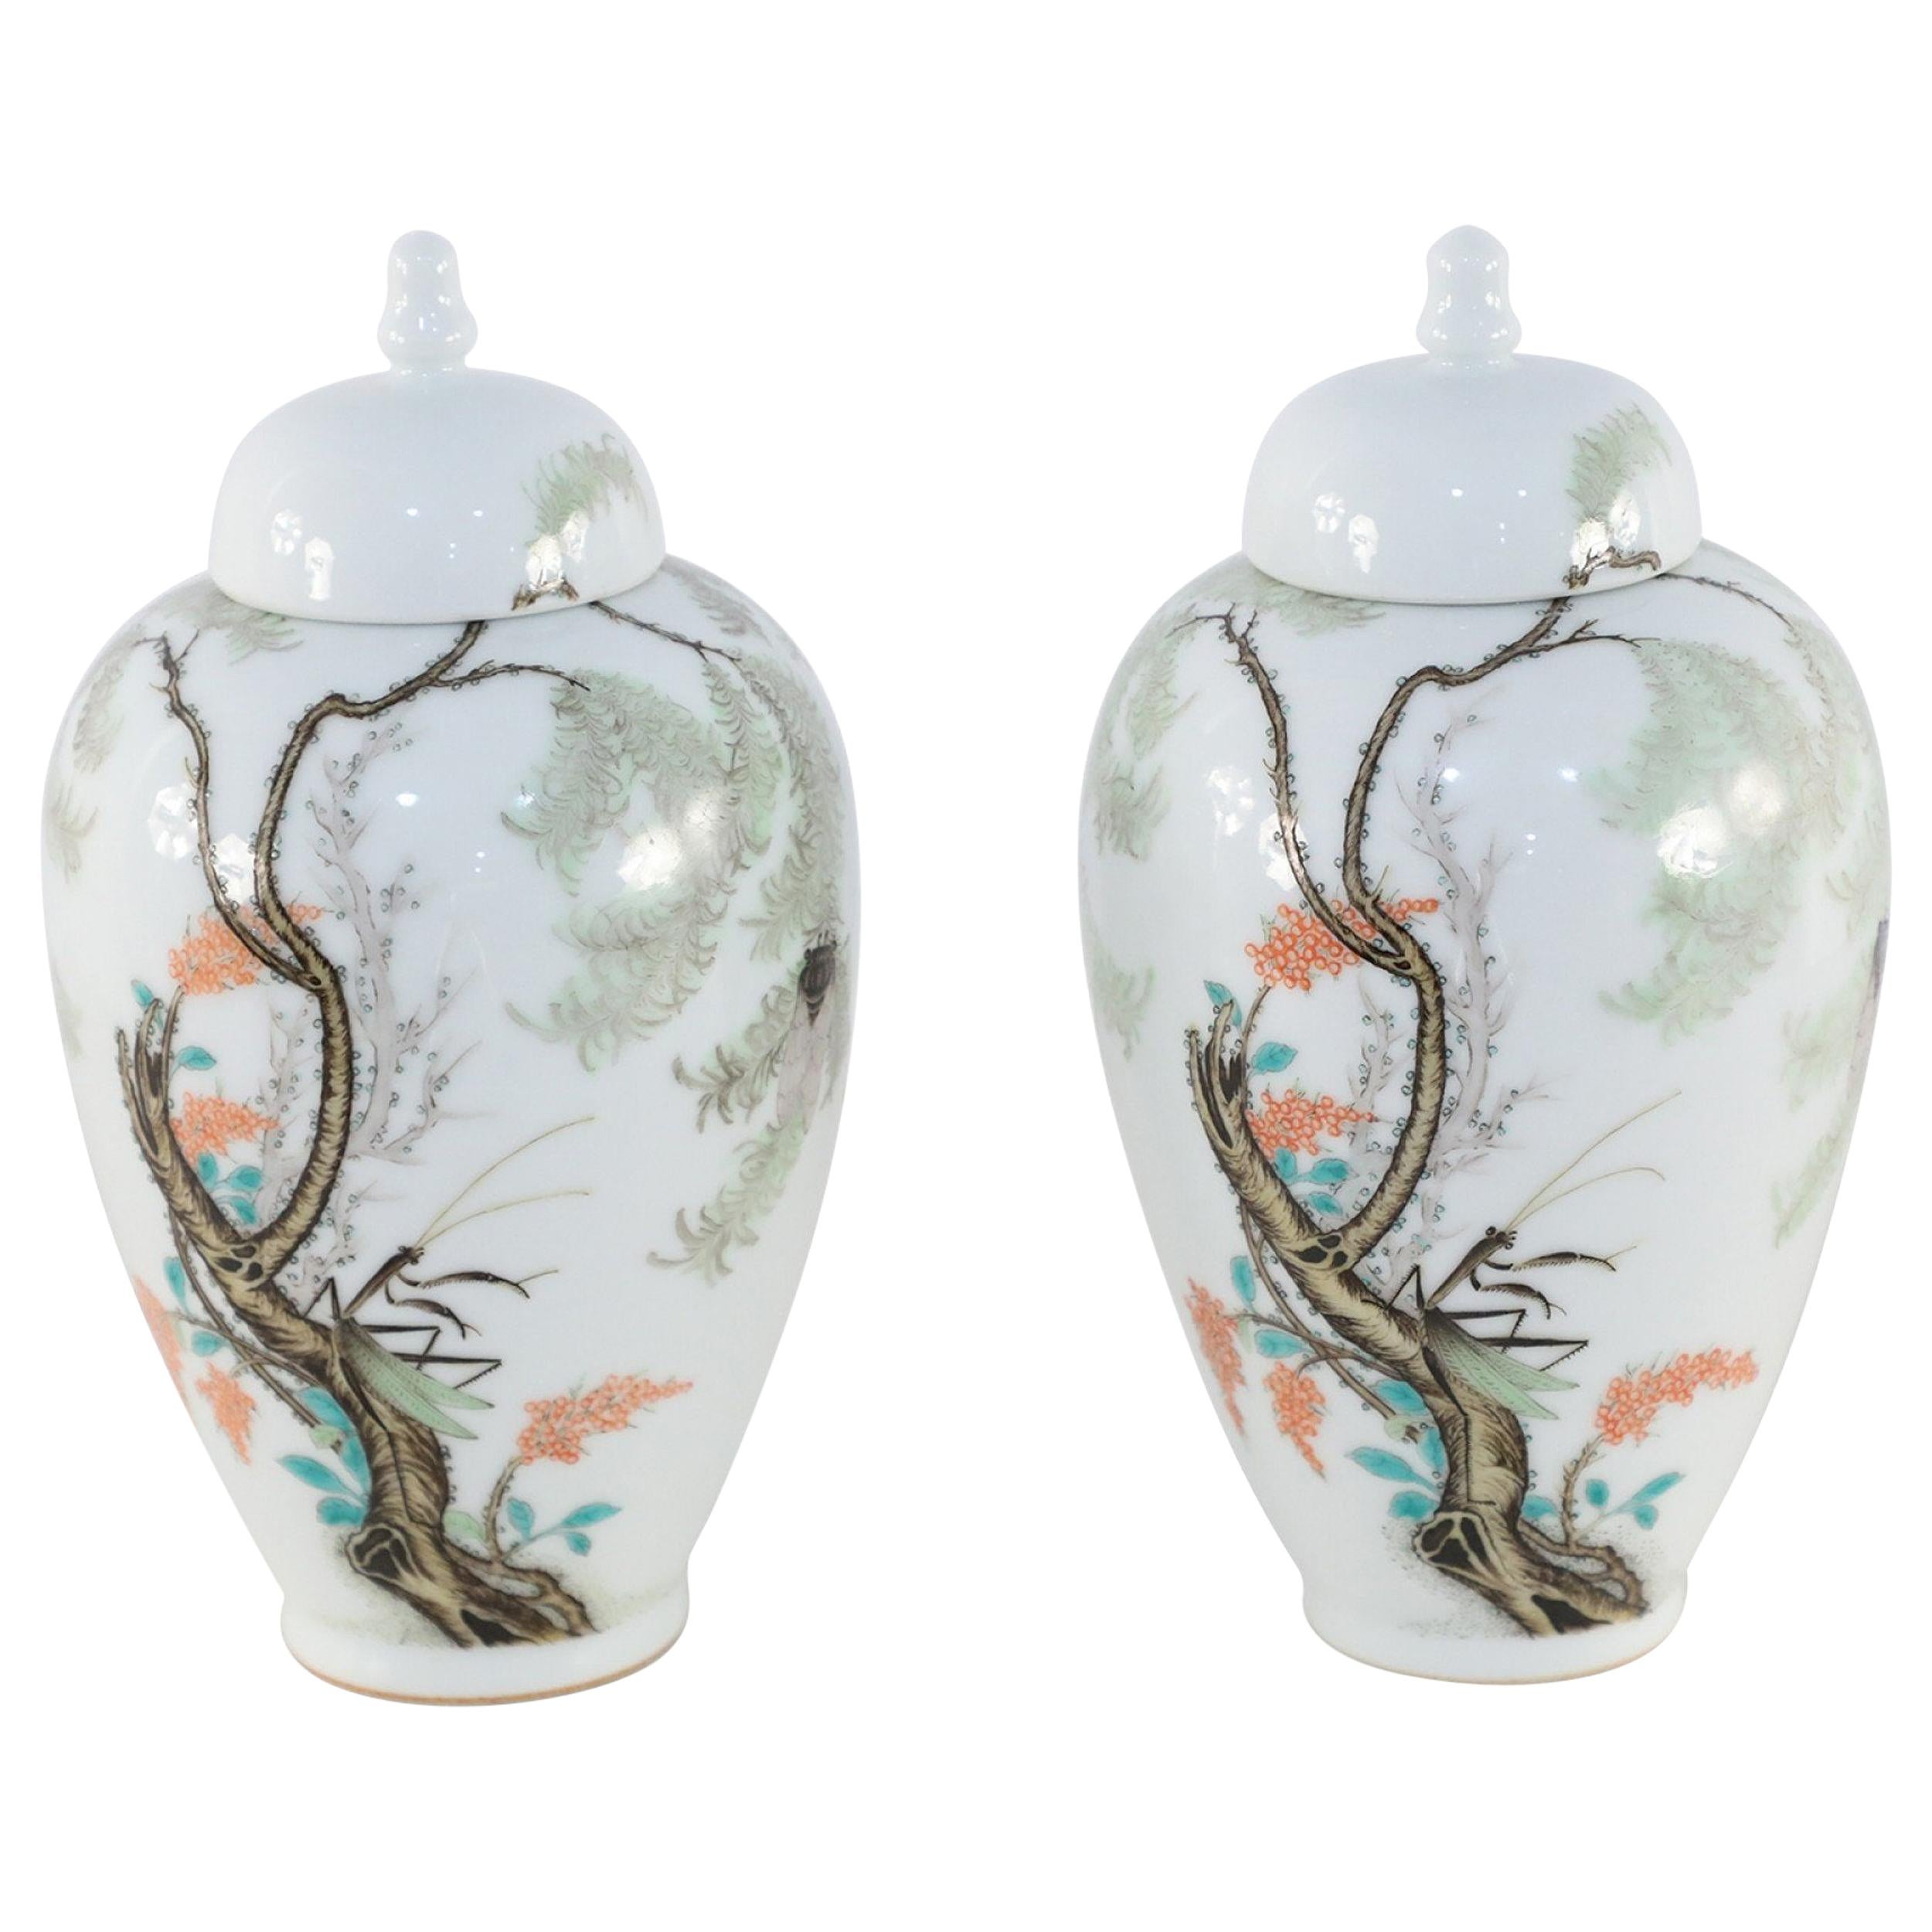 Pair of Chinese White Porcelain Famille Rose Lidded Jars